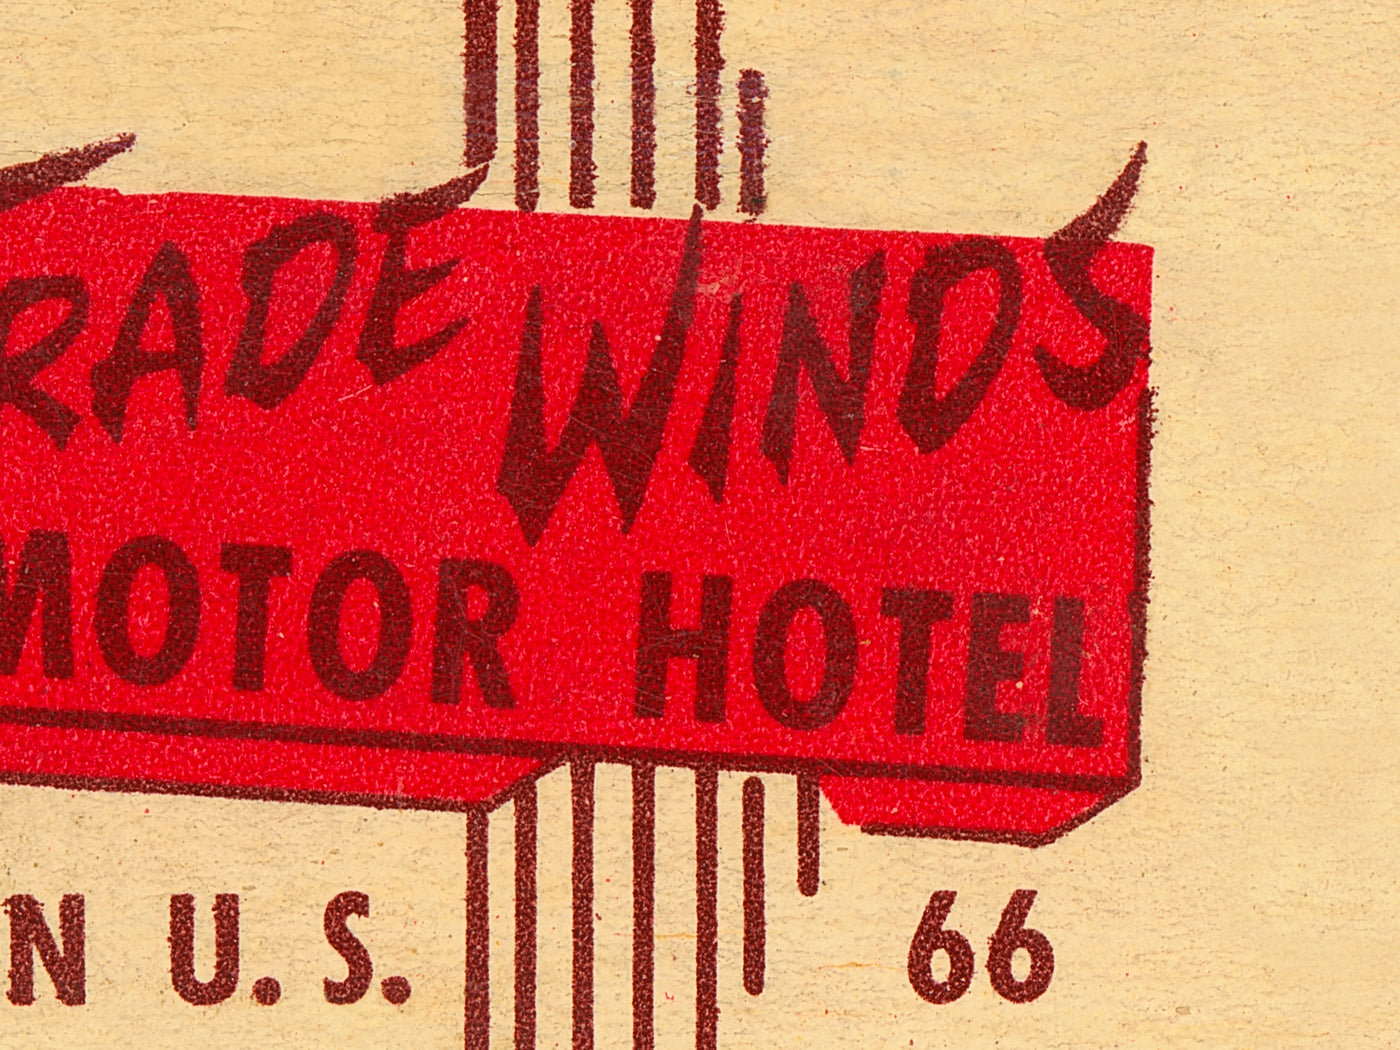 Trade Winds Motor Hotel Matchbook Print